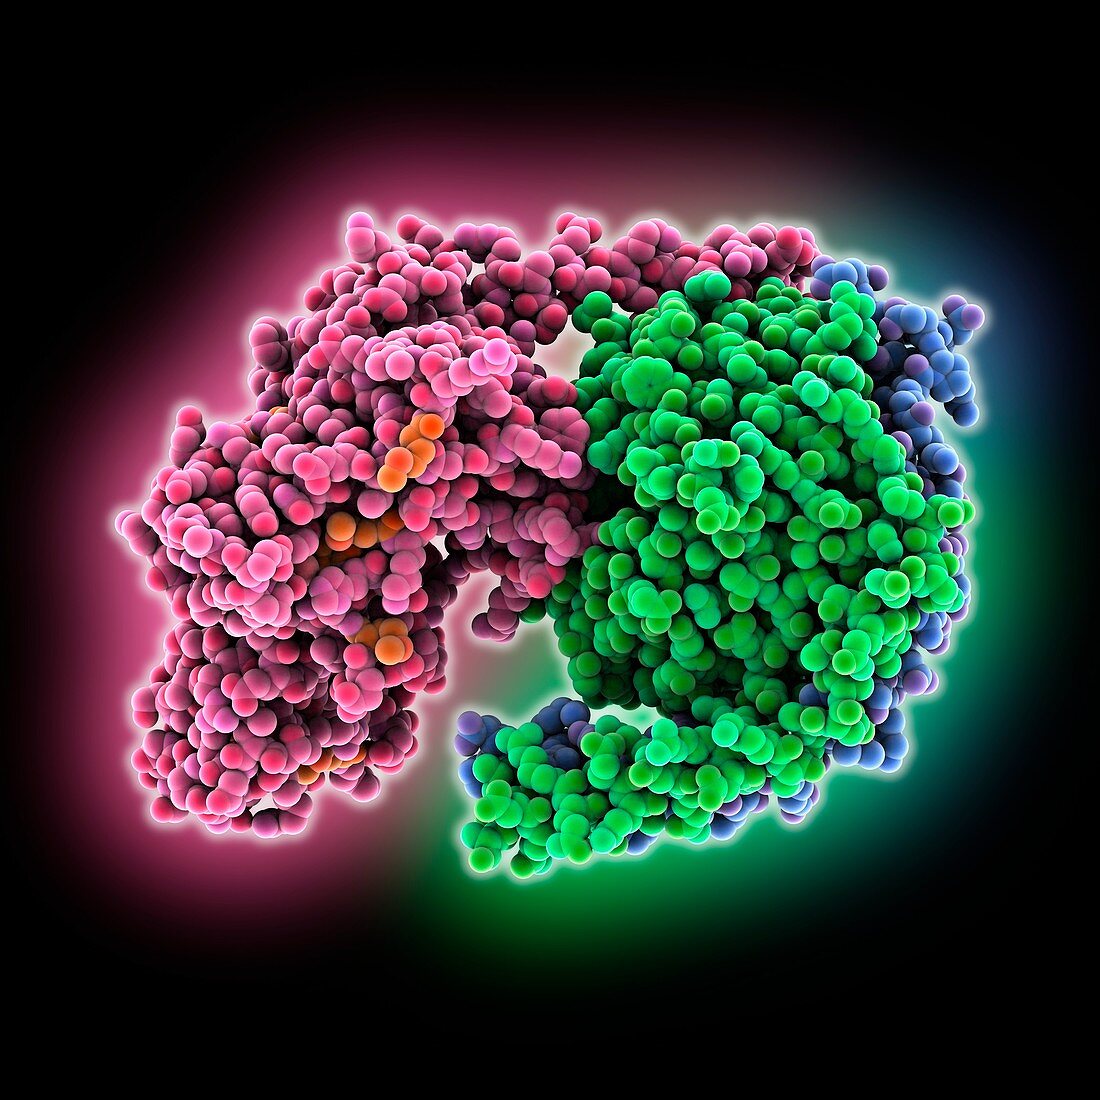 Heterotrimeric G protein molecule